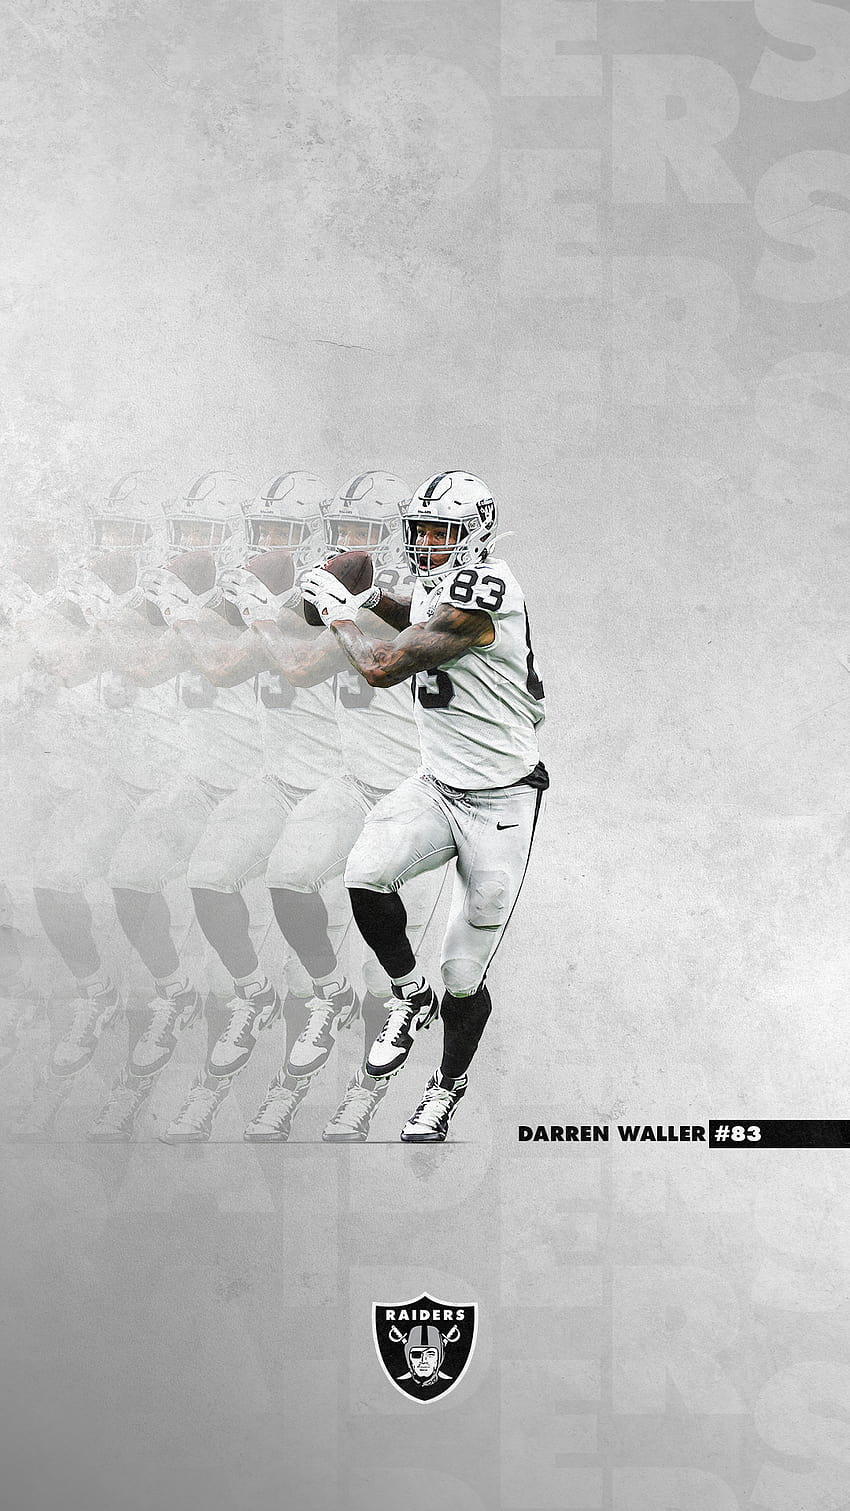 Download wallpapers Darren Waller Las Vegas Raiders NFL american  football portrait National Football League black stone background for  desktop free Pictures for desktop free